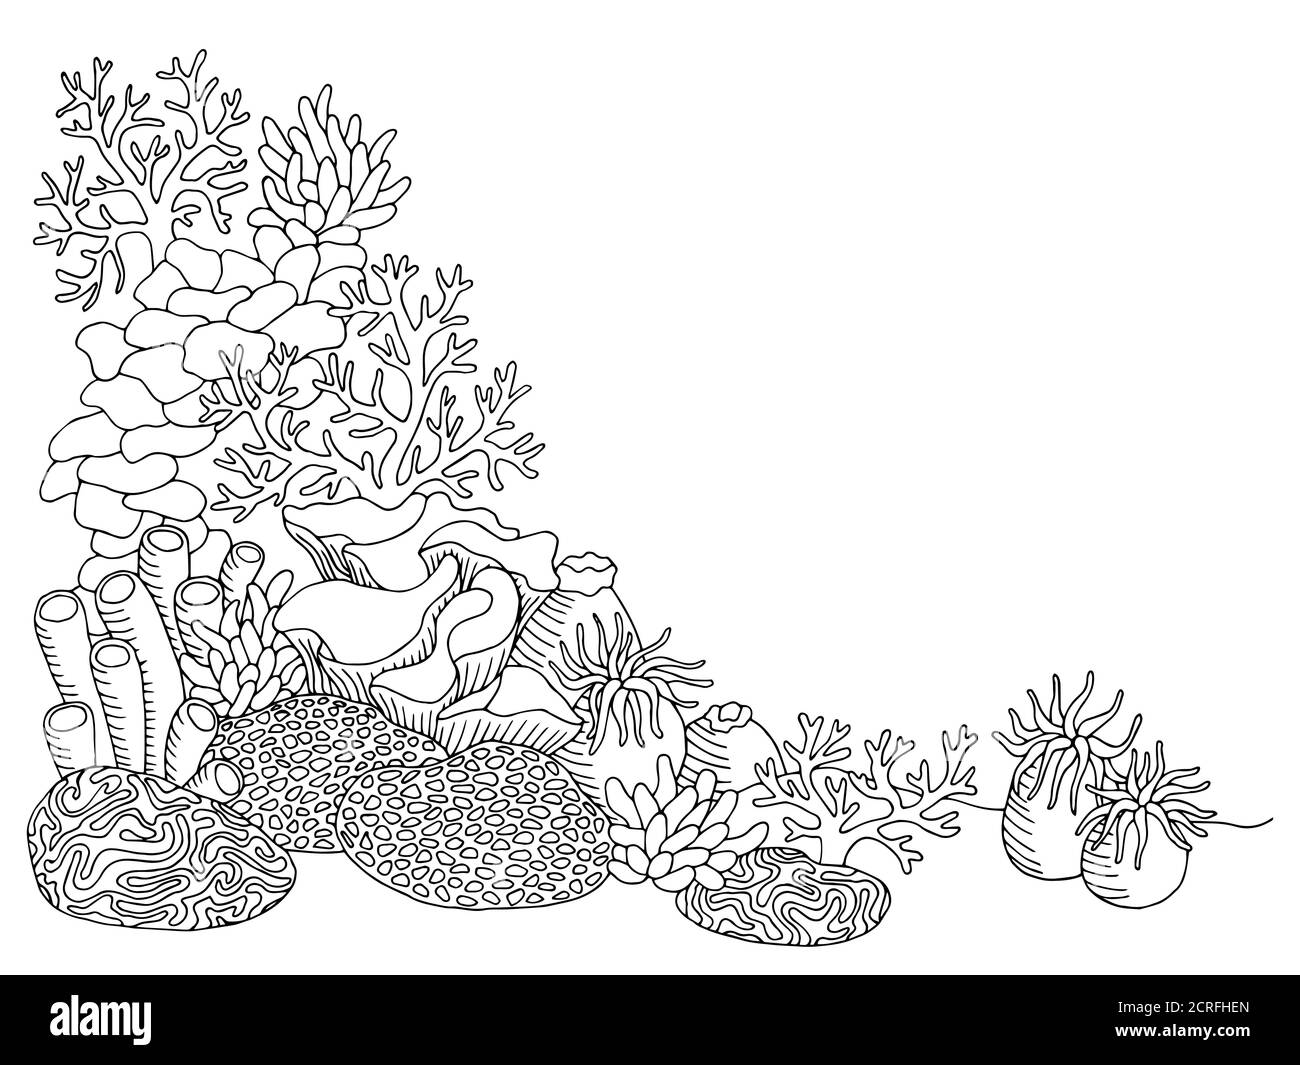 Korallen Meer Grafik Kunst schwarz weiß Unterwasser Landschaft Illustration Vektor Stock Vektor